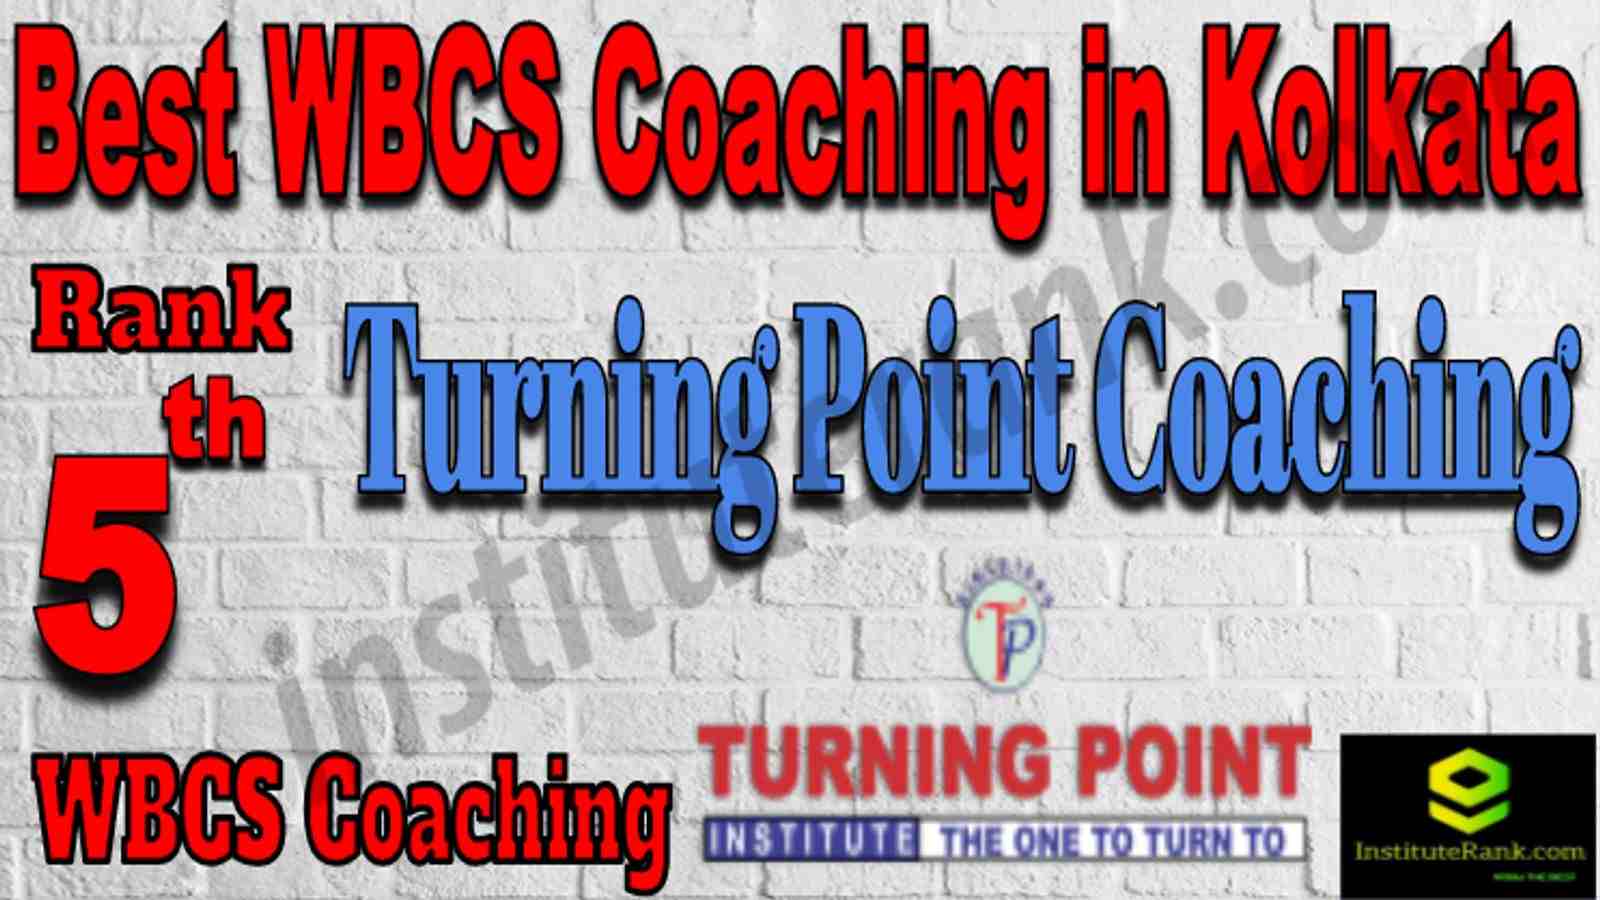 Rank 5 Best WBCS Coaching in Kolkata